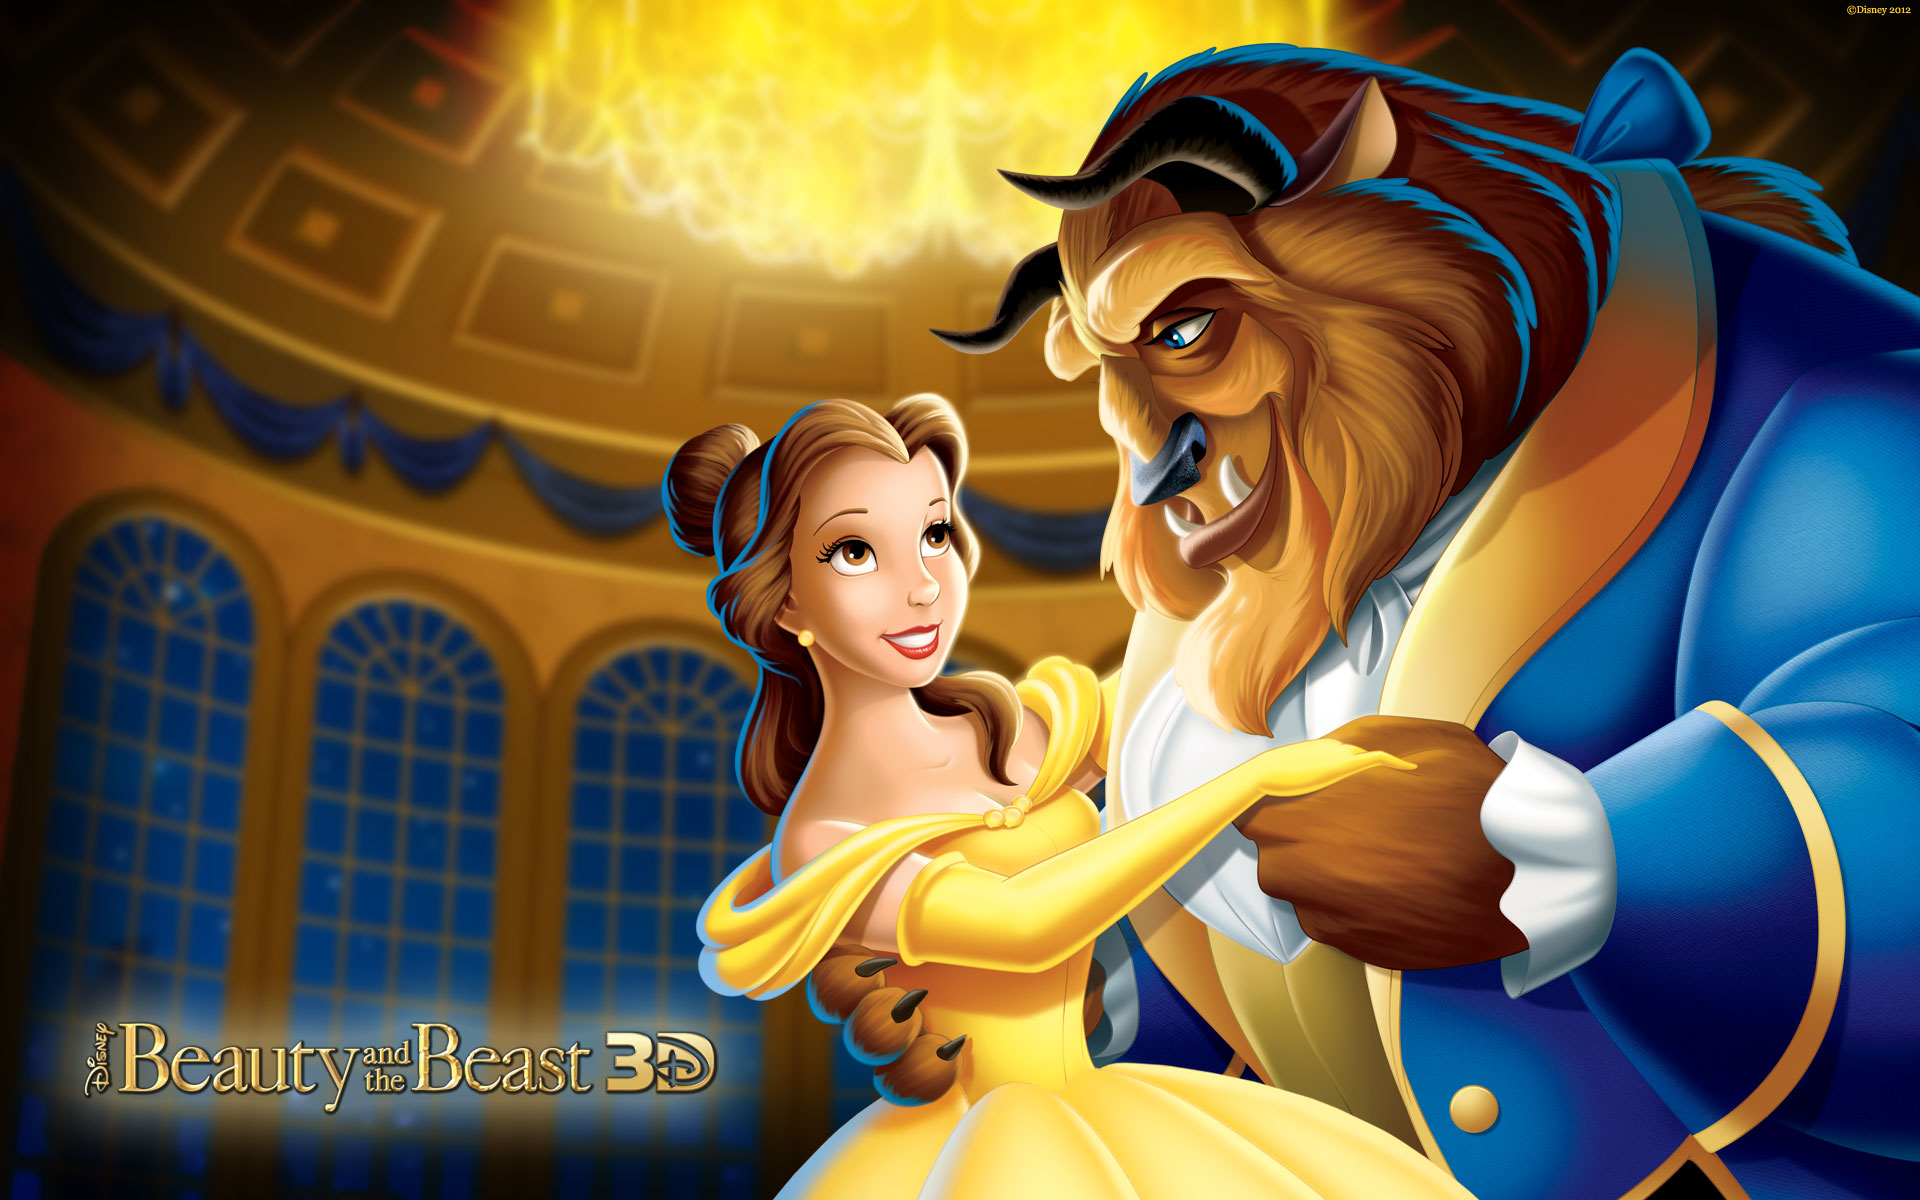 10. "Beauty and the Beast" Disney Princess Nail Art - wide 8